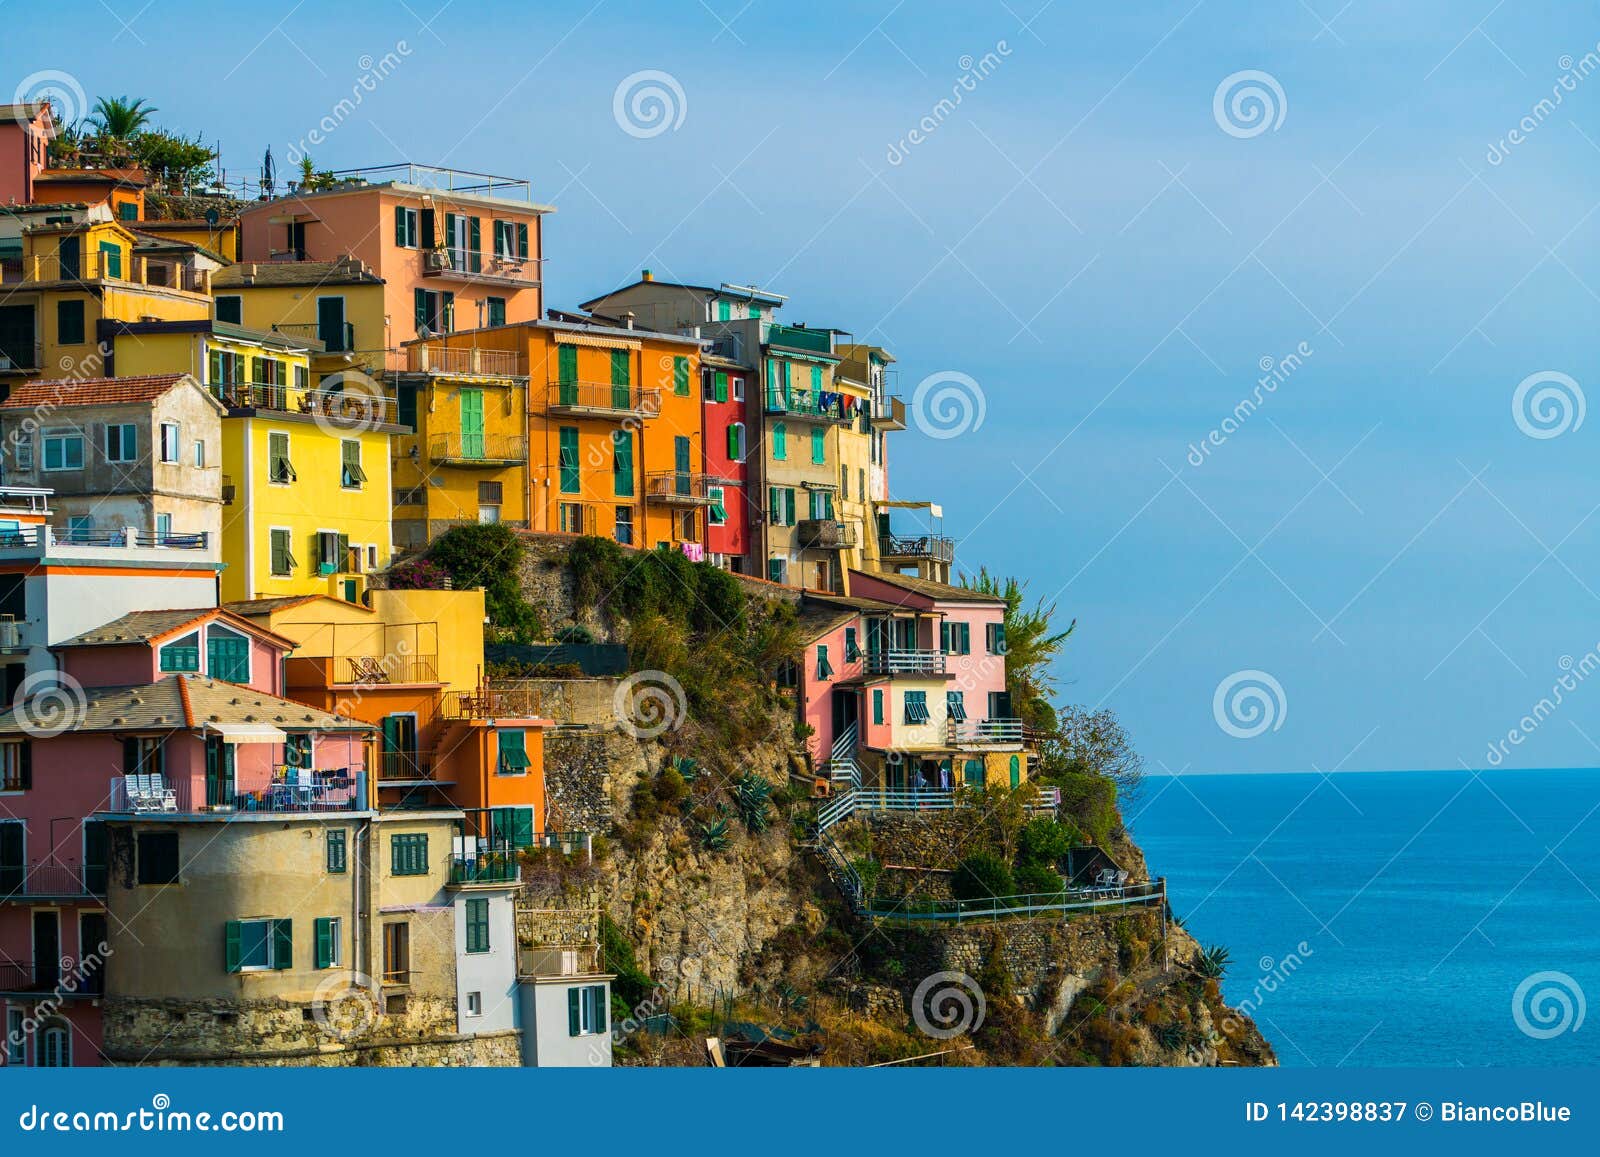 Colorful Houses in Manarola, Cinque Terre - Italy Stock Image - Image ...